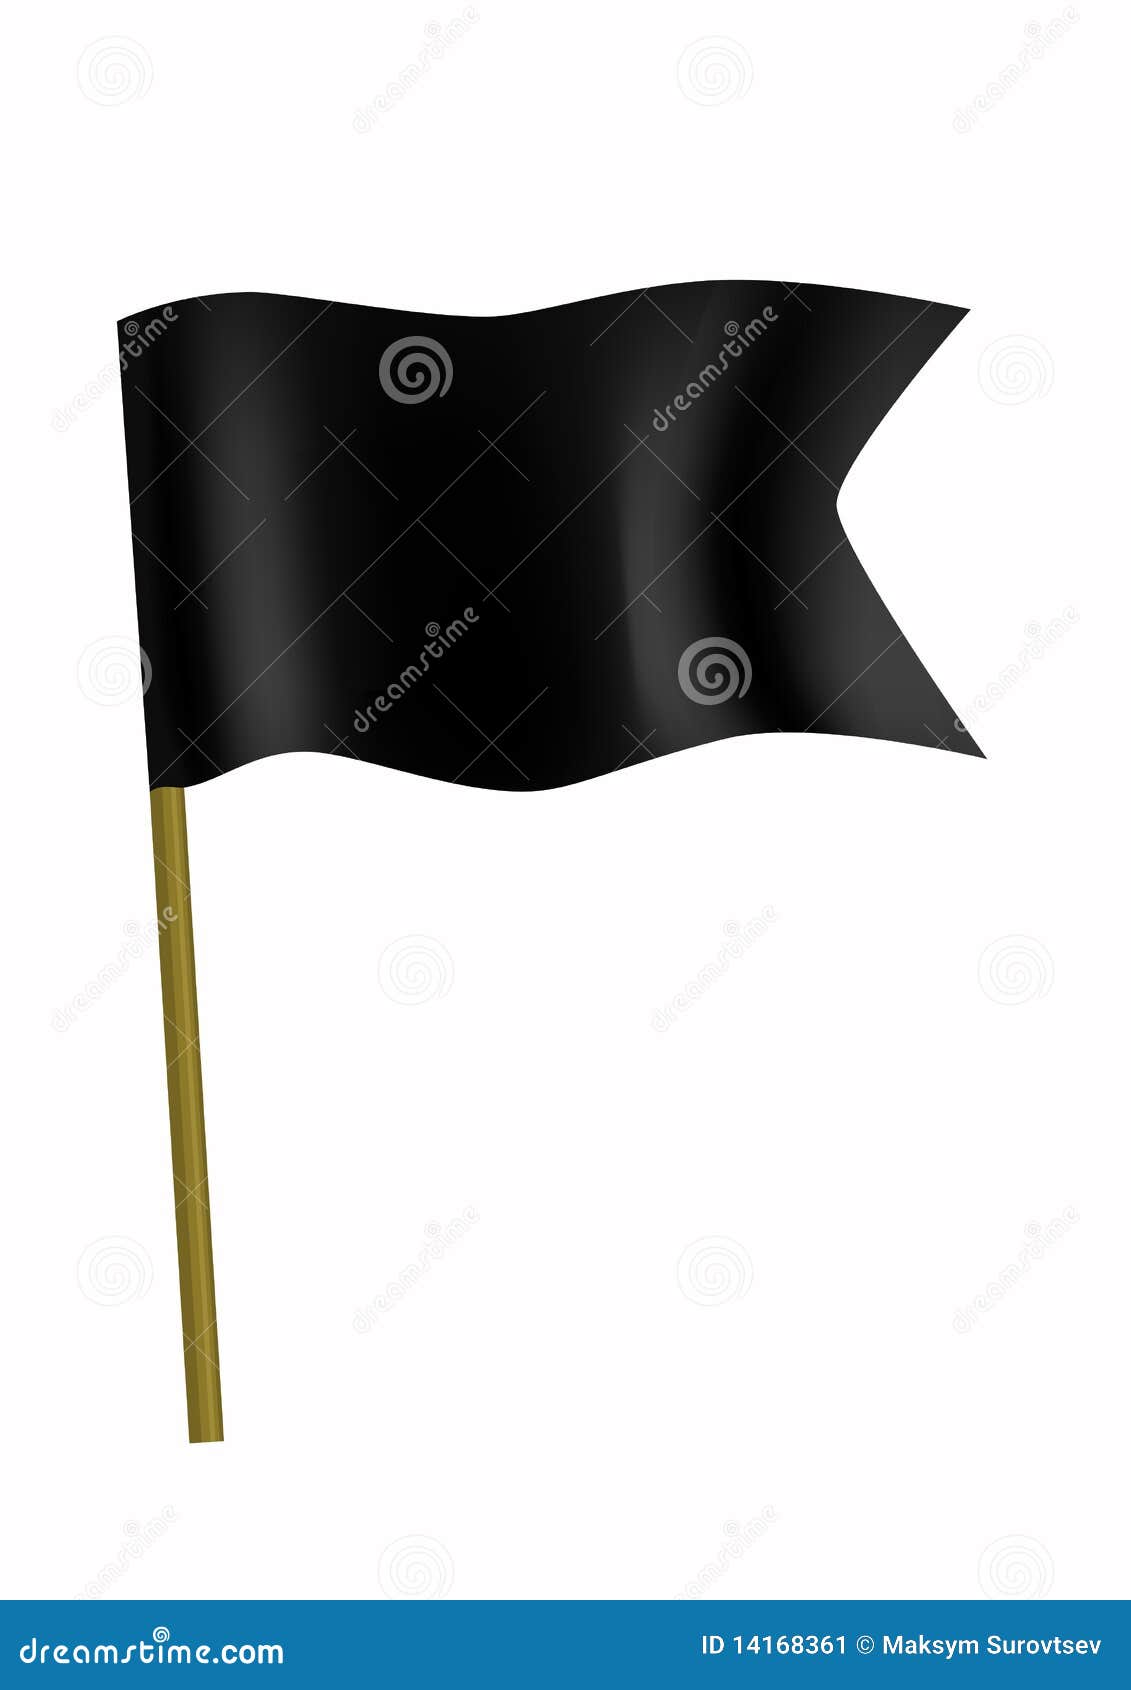 Черные флажки. Флажок черный. Черный флаг. Флажок черного цвета. Белый флаг на черном фоне.